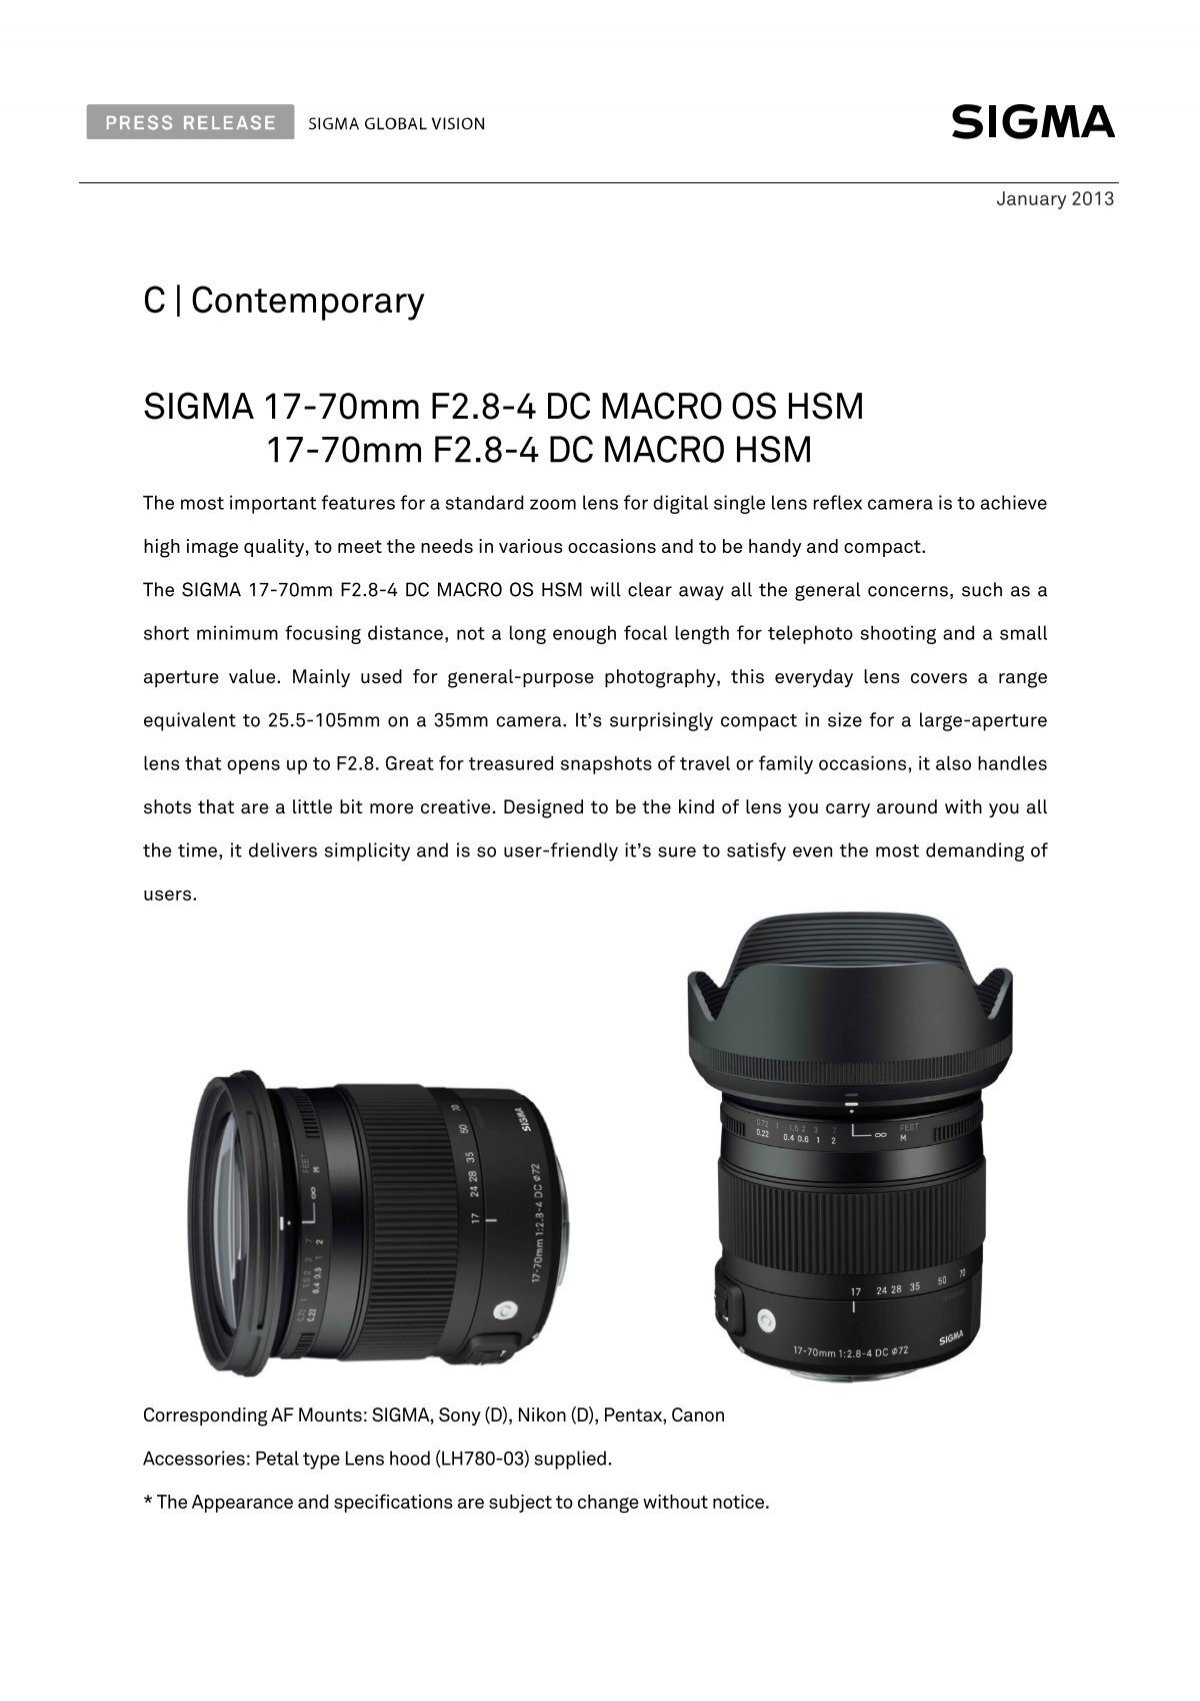 C | Contemporary SIGMA 17-70mm F2.8-4 DC MACRO OS HSM 17